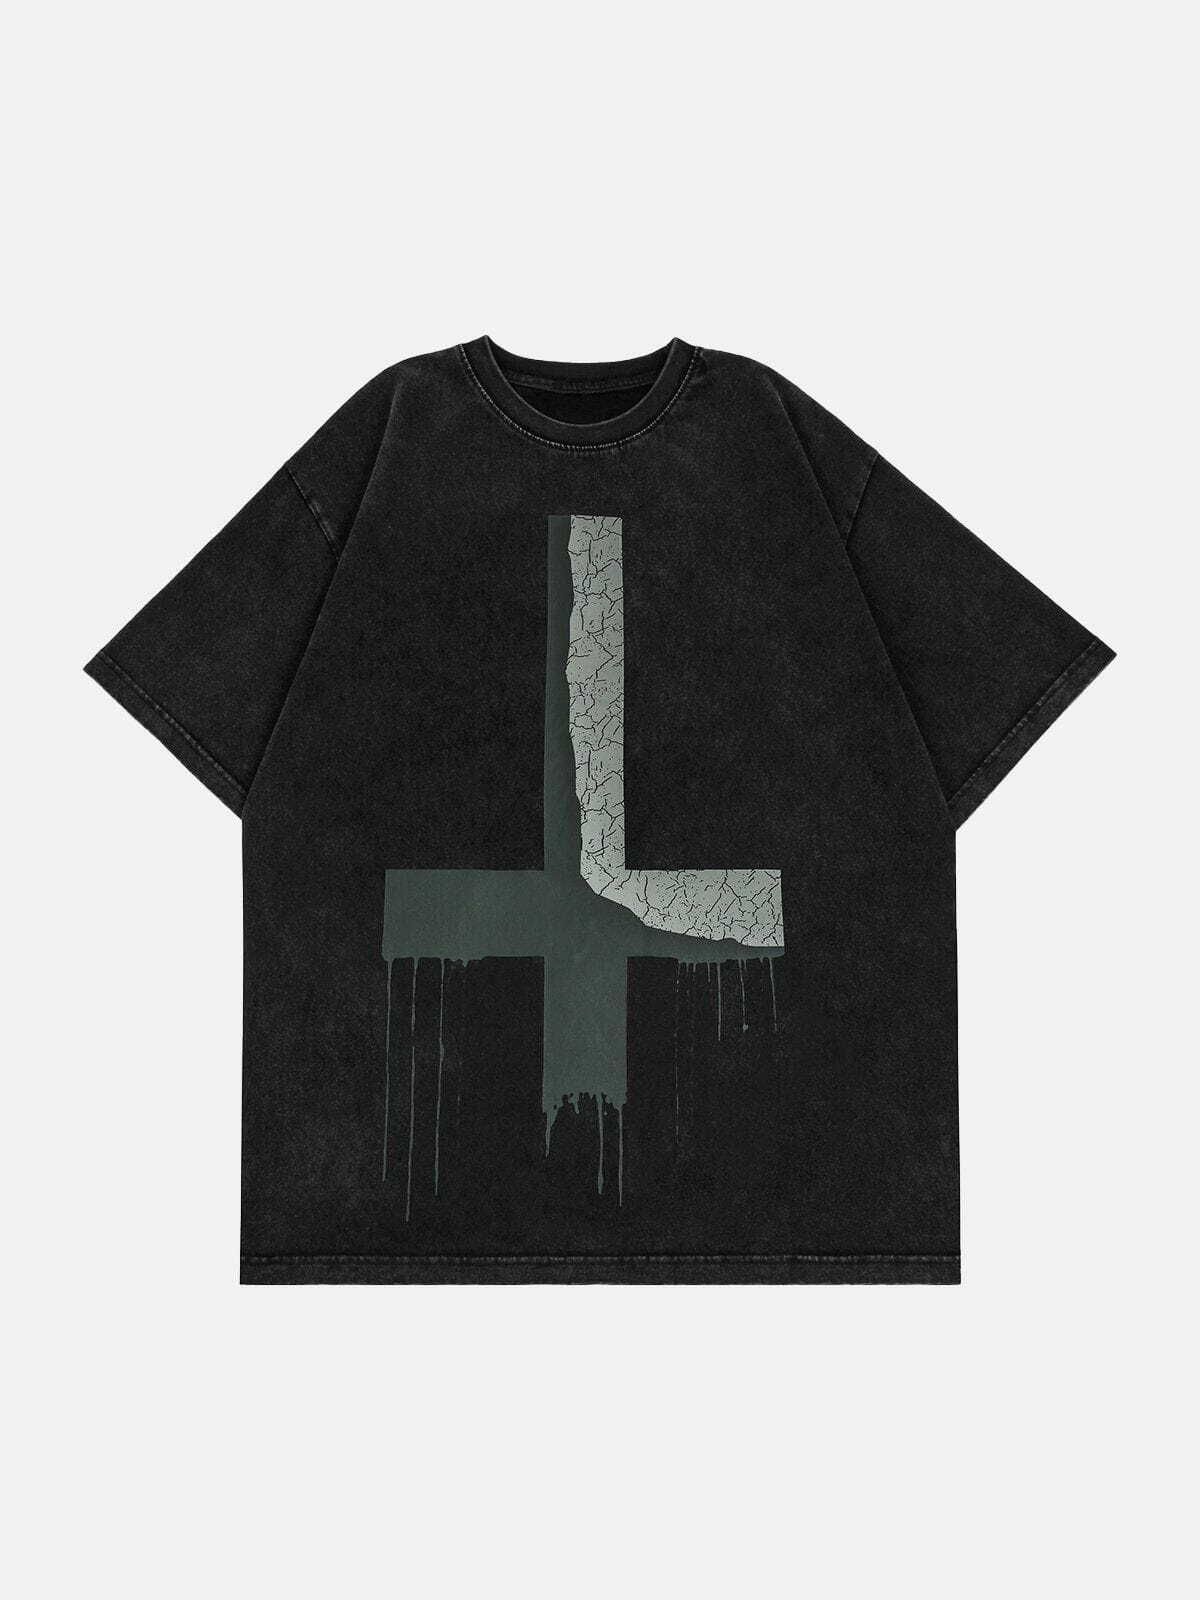 inverted cross cross tee edgy streetwear icon 5804